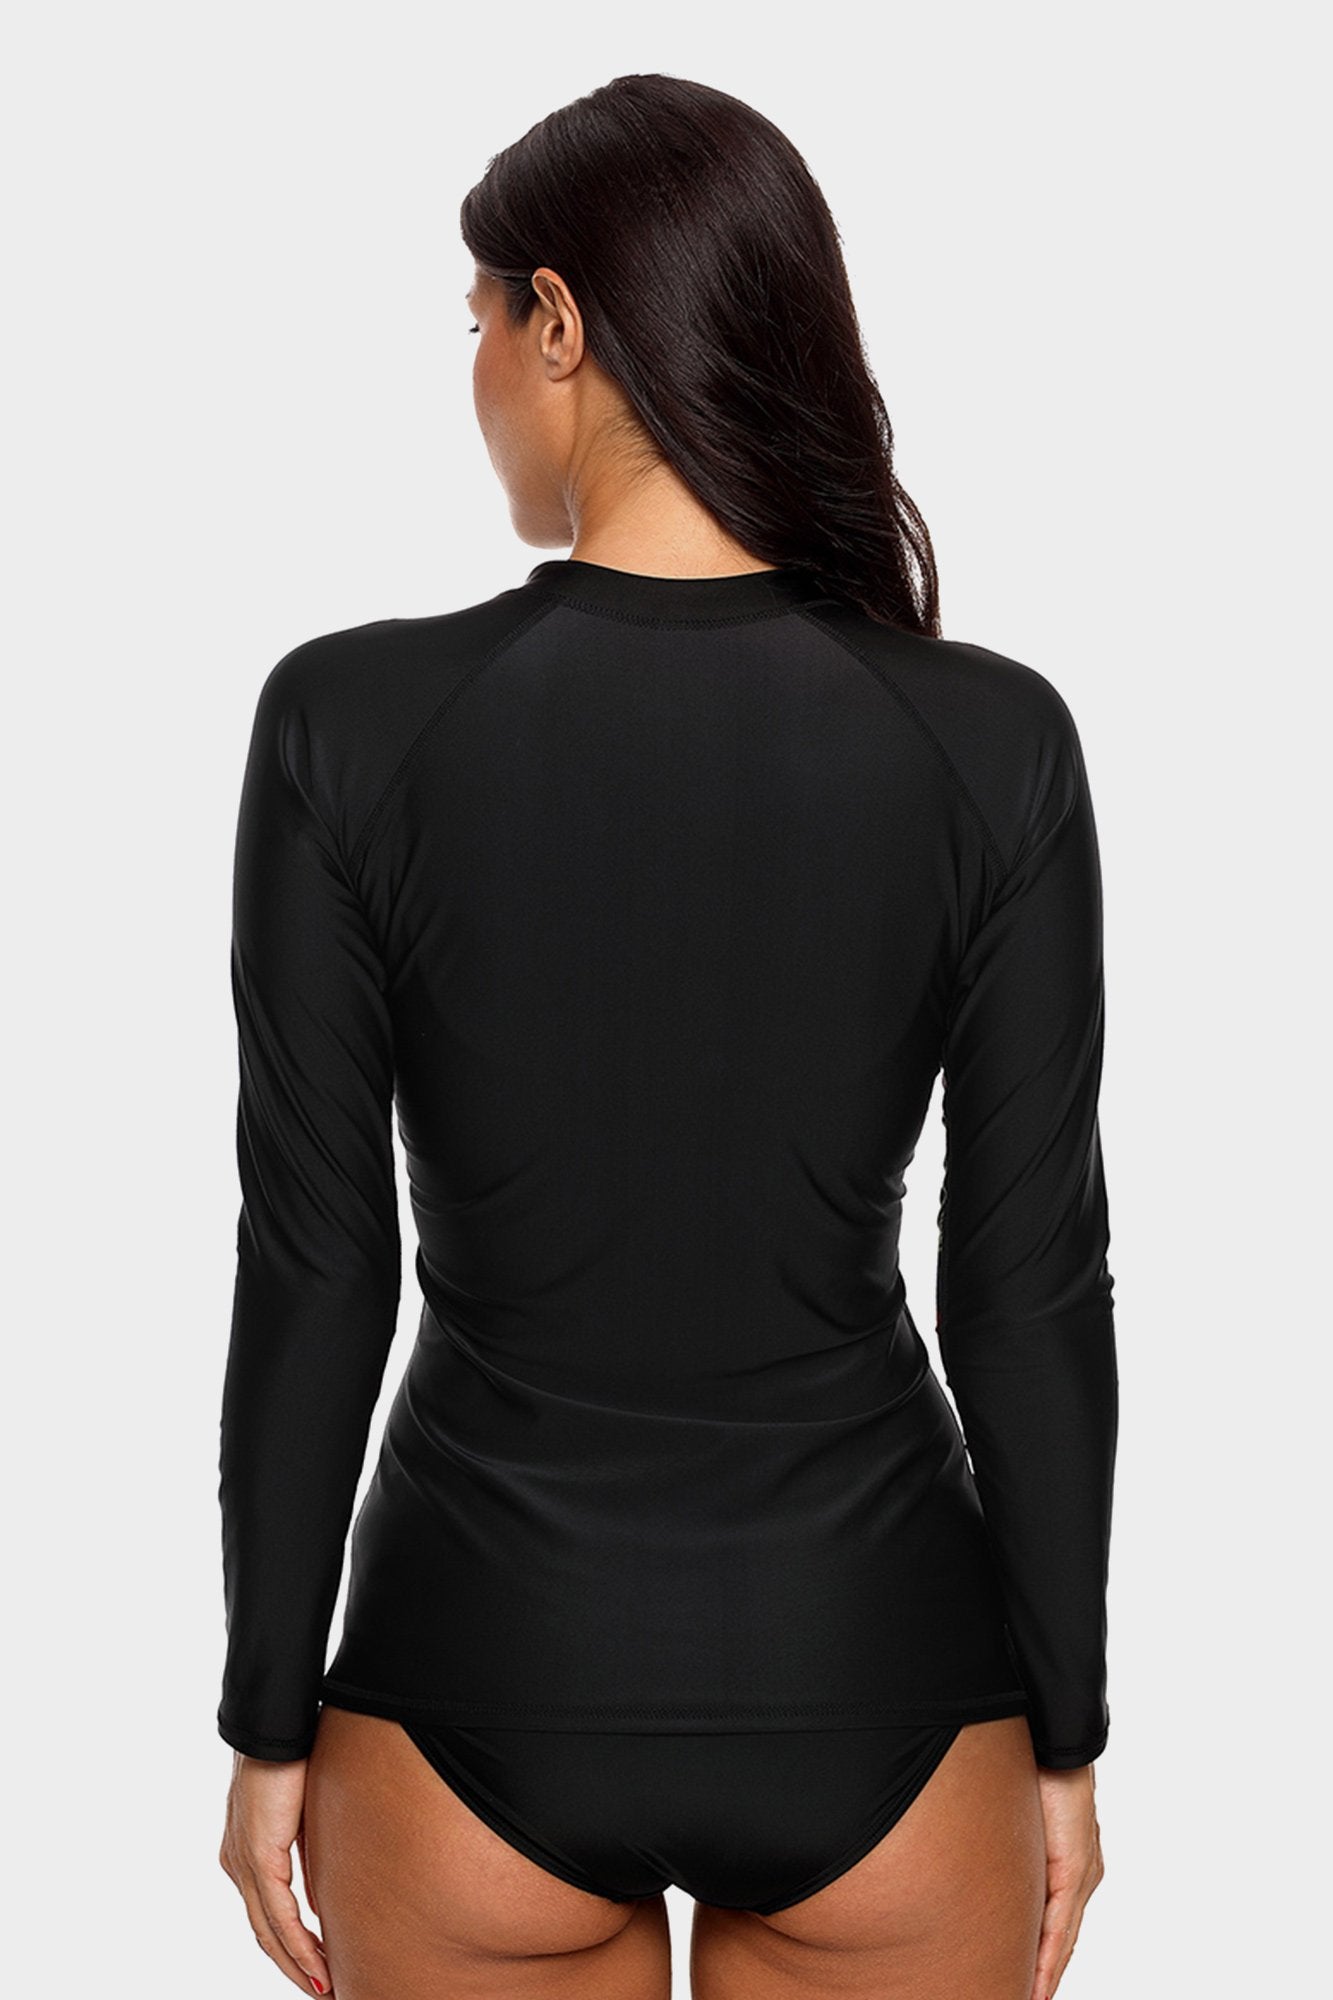 Attraco Black Women's Floral Printed Zip Long Sleeve UPF 50+ Rash Guard-Attraco | Fashion Outdoor Clothing